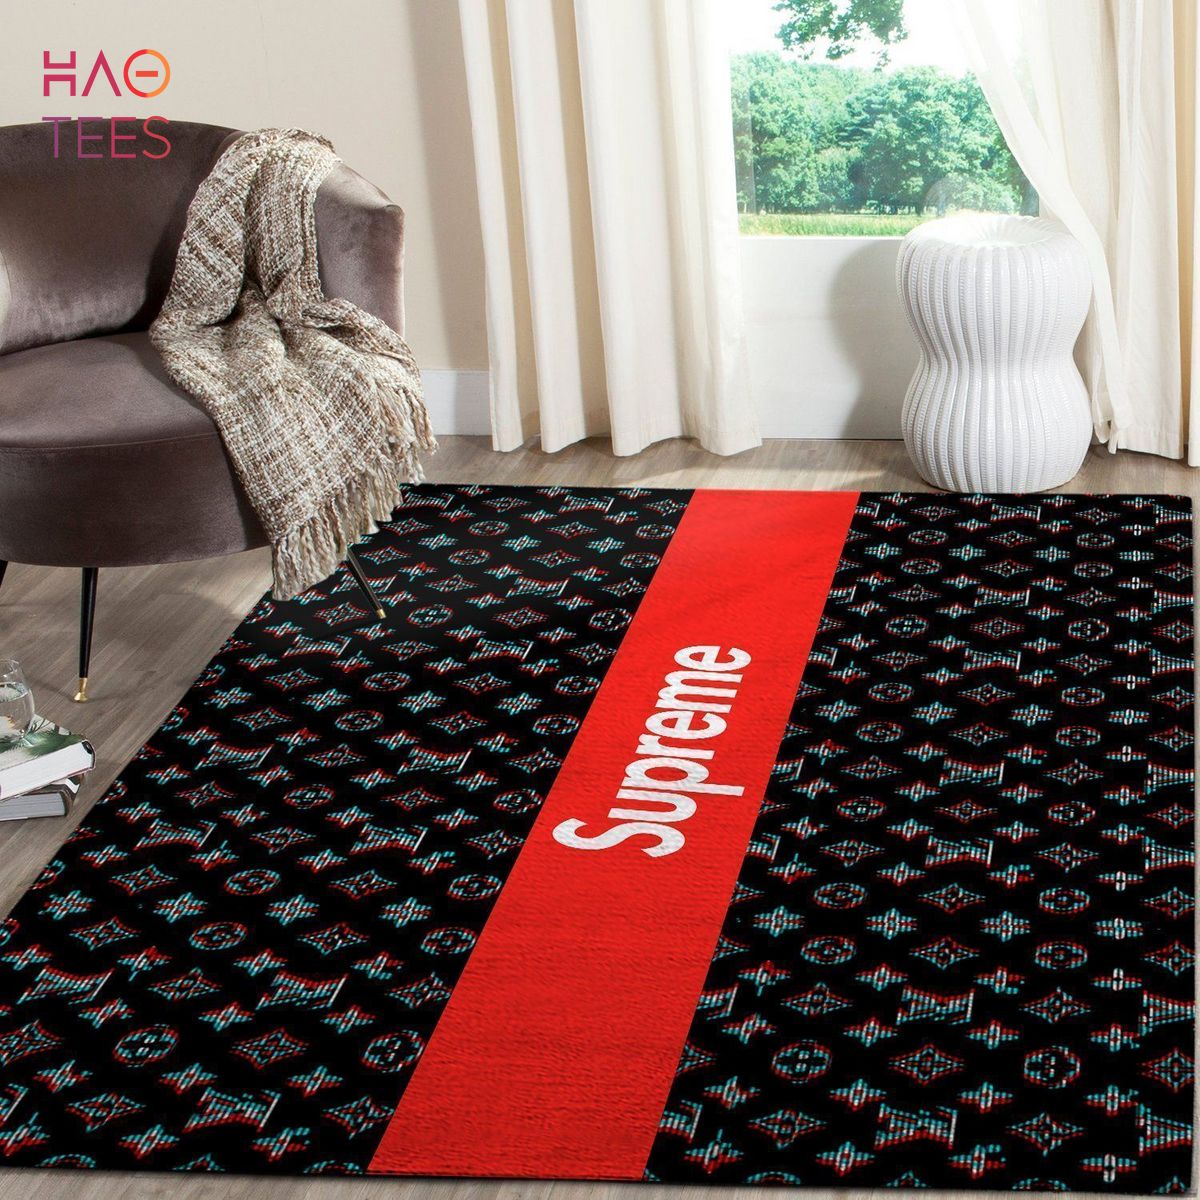 Supreme Area Rug Red Hypebeast Carpet Luxurious Fashion Brand Logo